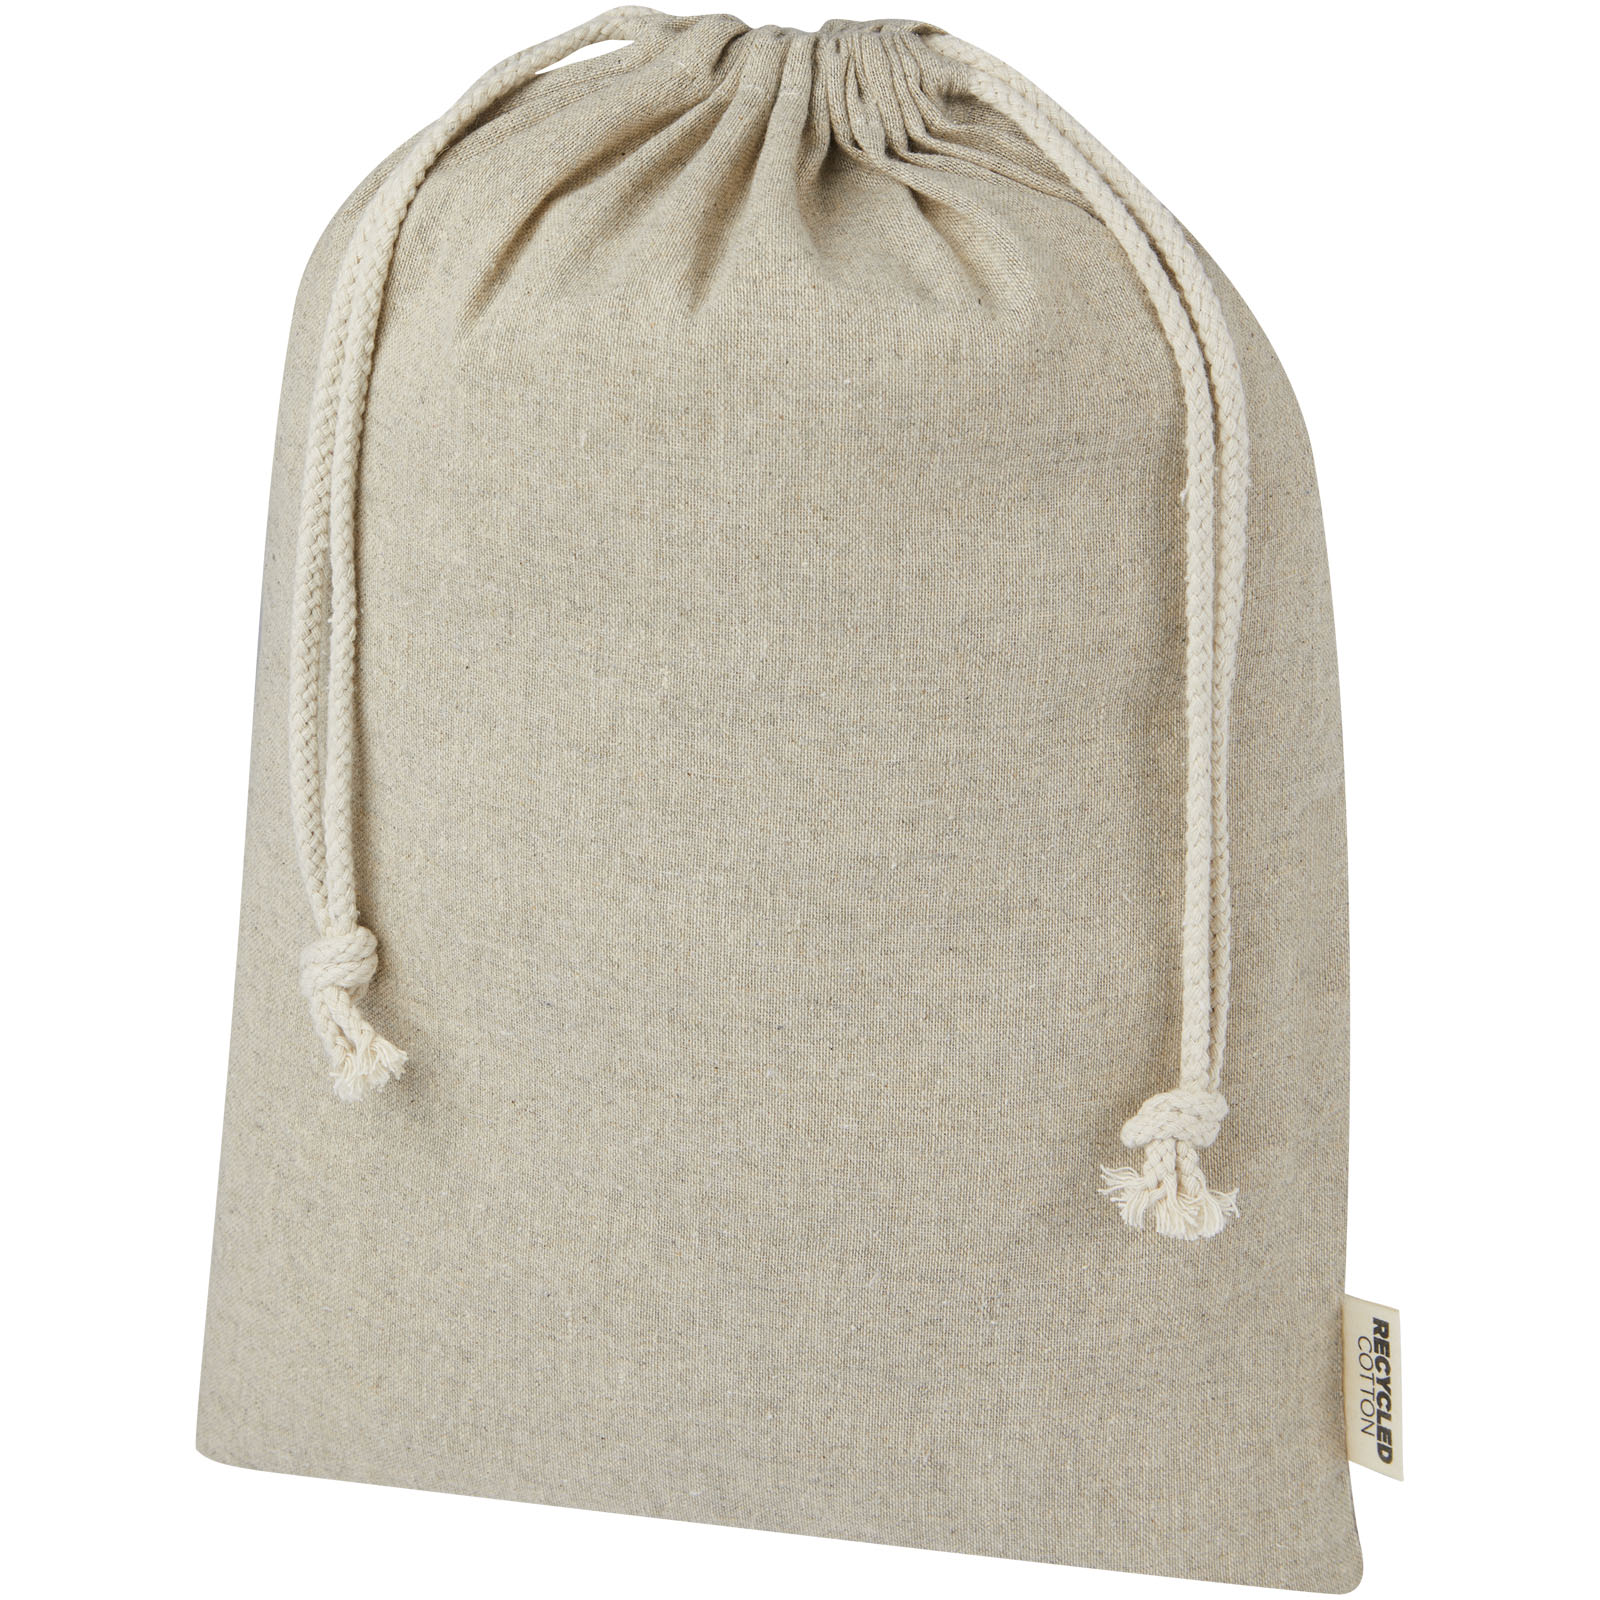 Sacs en coton - Grand sac cadeau Pheebs en coton recyclé GRS 150 g/m² de 4 L